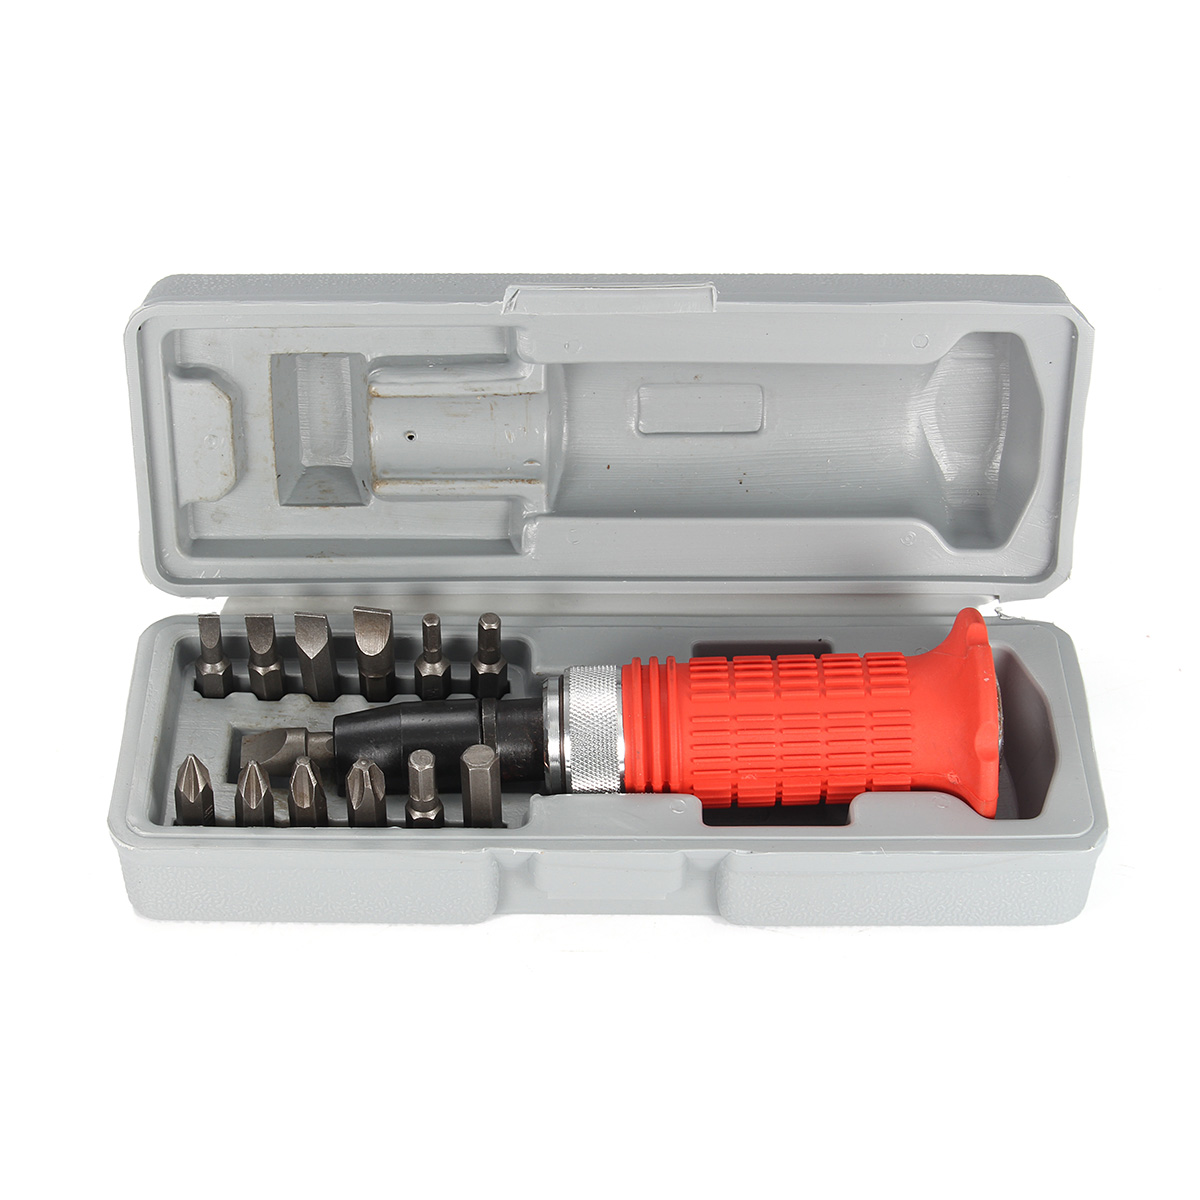 Multi-Purpose-Heavy-Duty-Impact-Screwdriver-Set-Driver-Chisel-Bits-Tools-Socket-Kit-with-Case-1260705-6